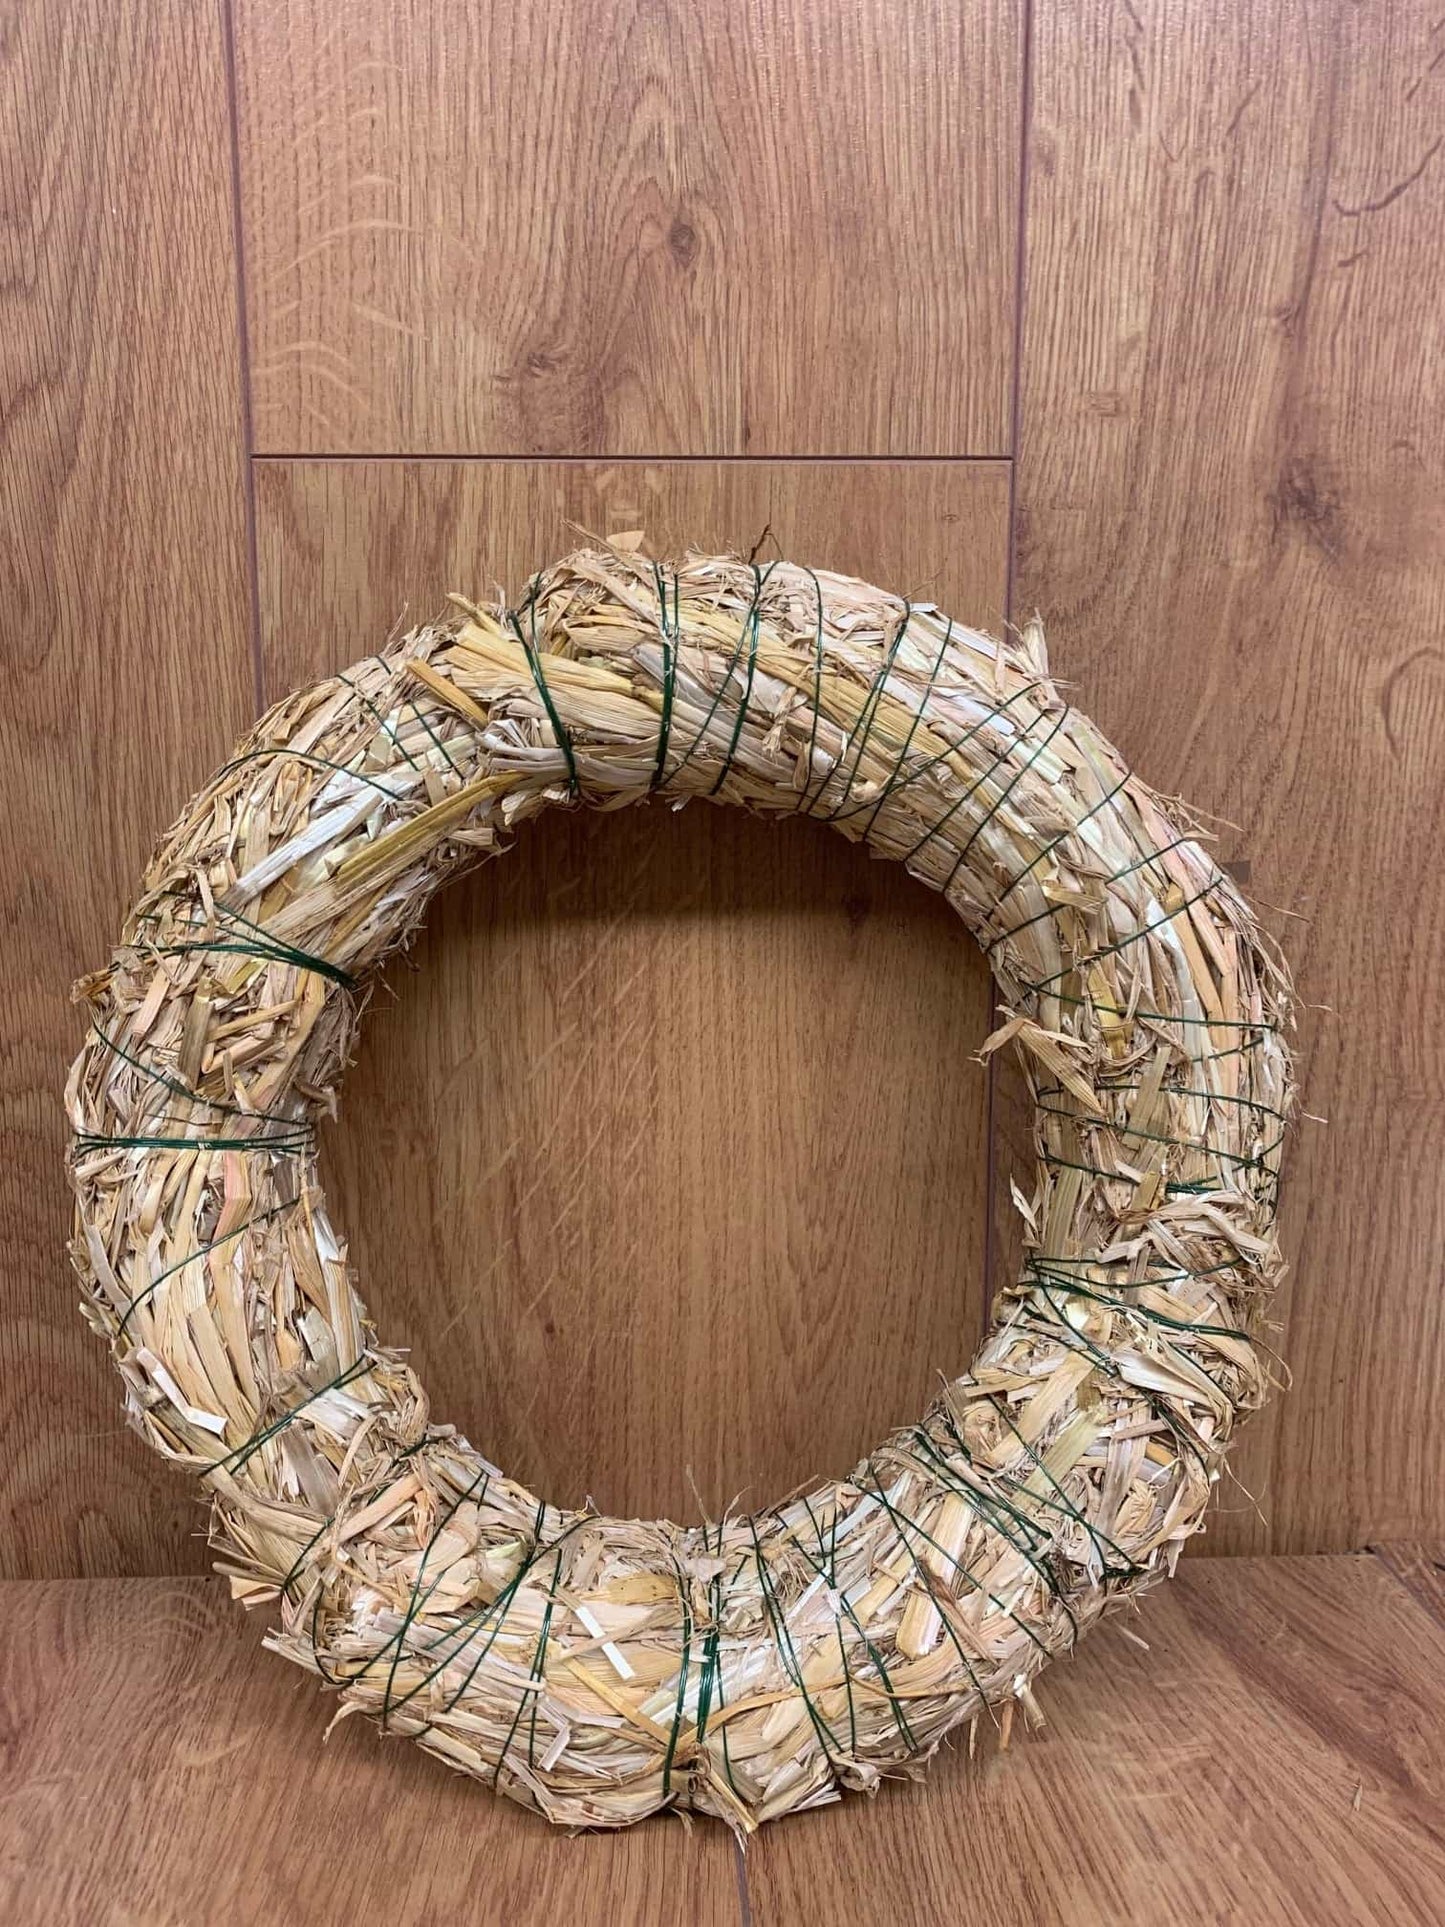 Straw Wreath Rings